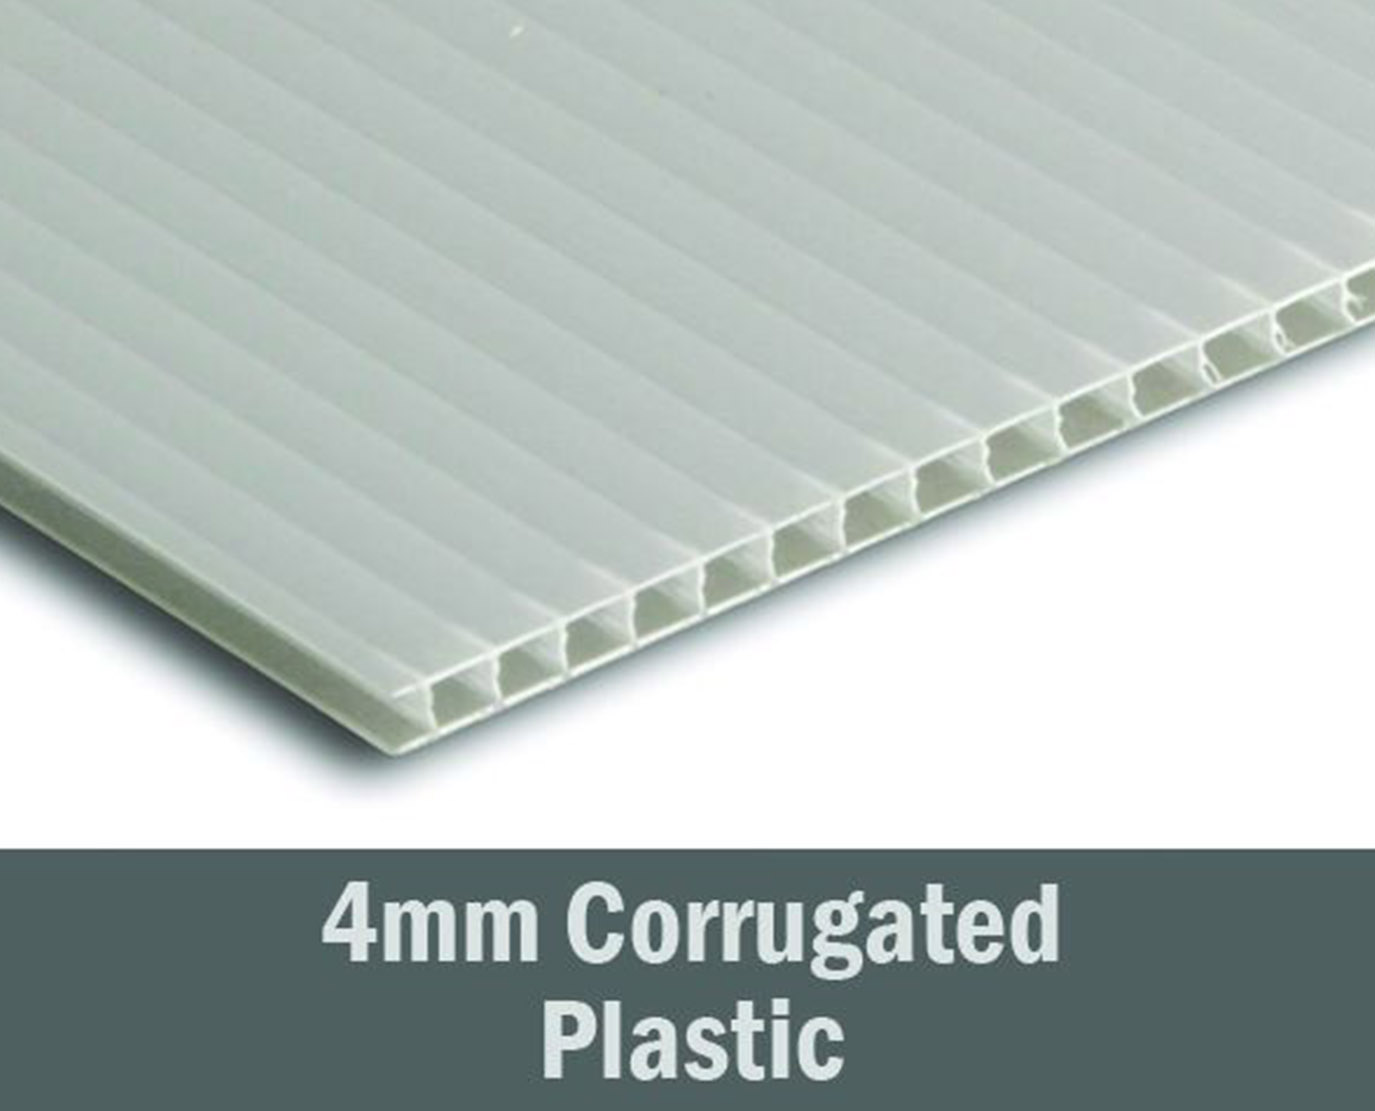 4mm corrugated plastic